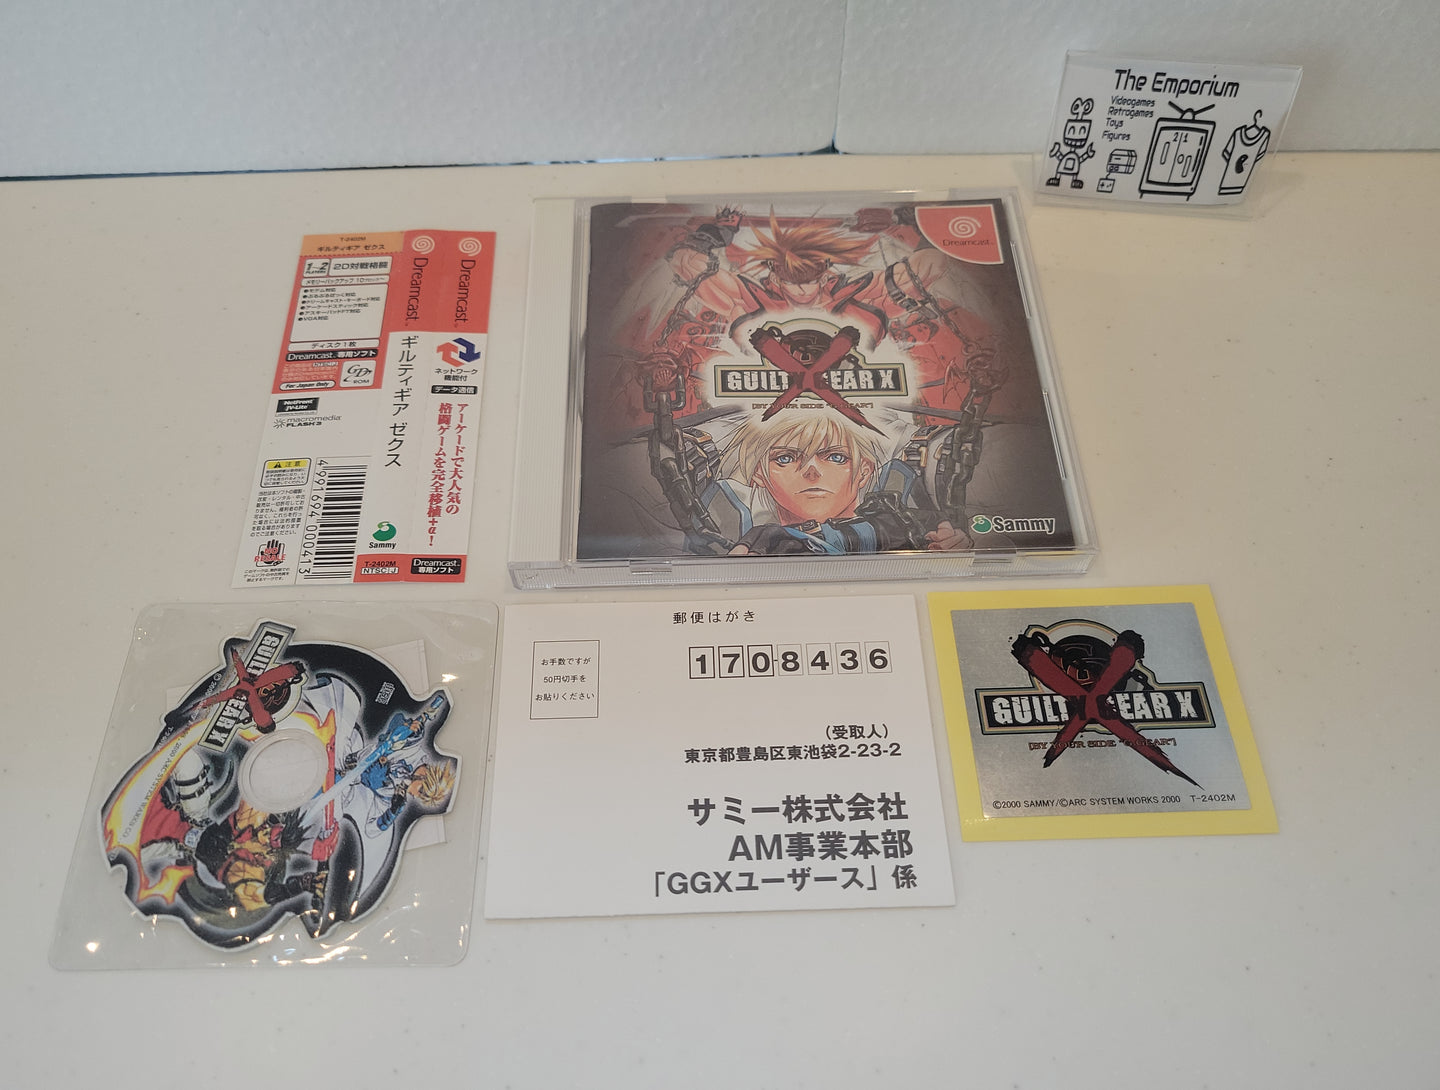 Guilty gear x first print with mini cd  - Sega dc Dreamcast